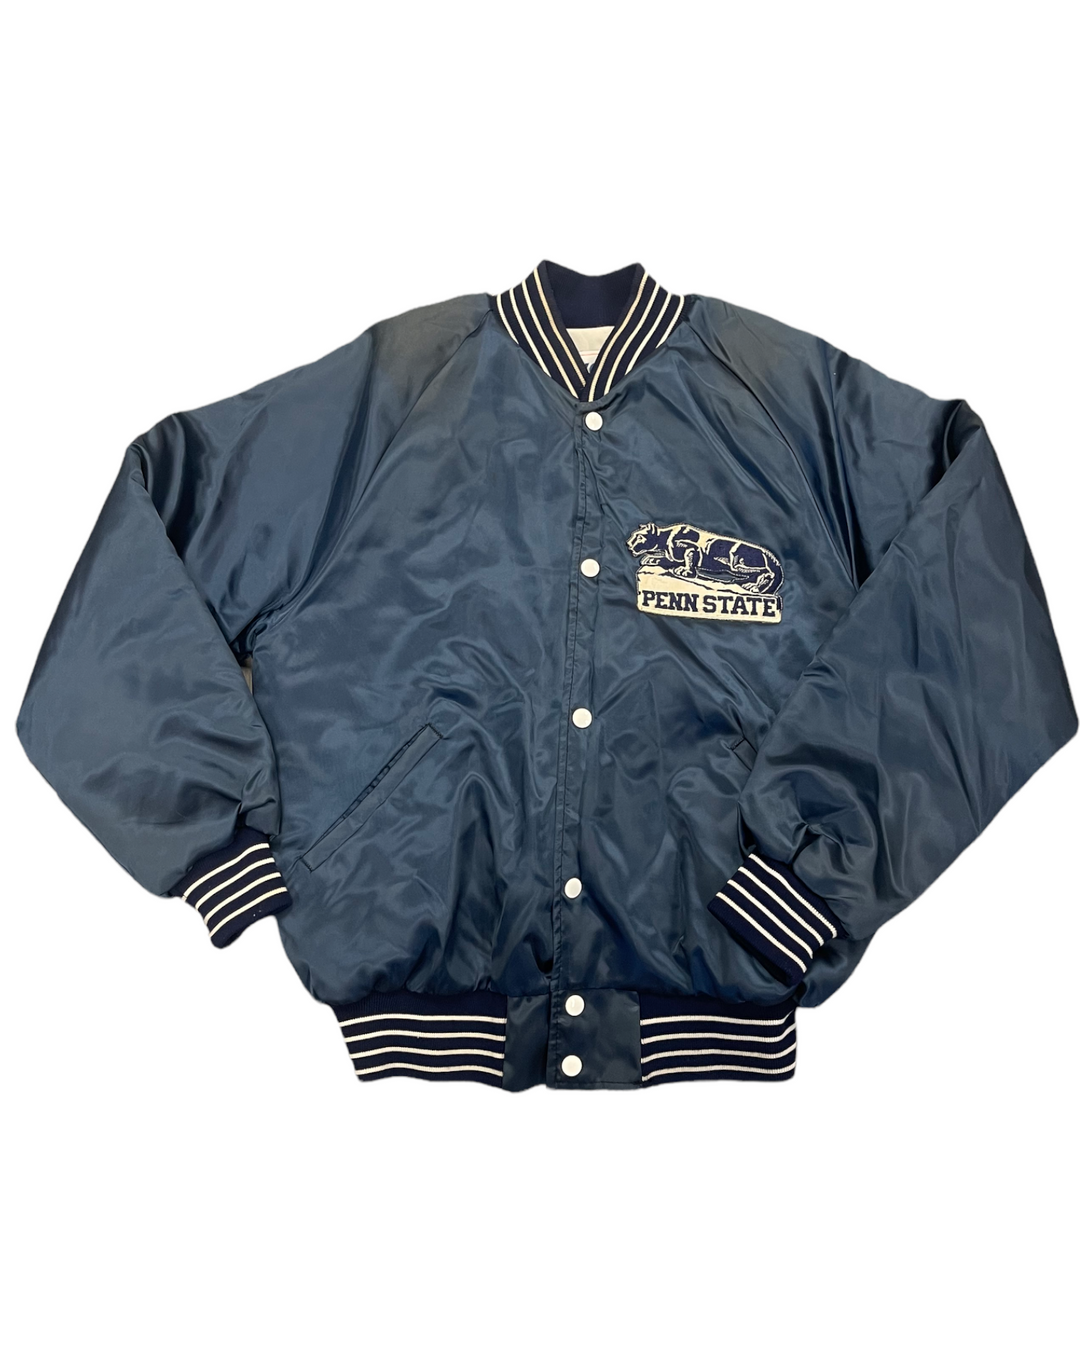 Penn State Vintage Bomber Jacket